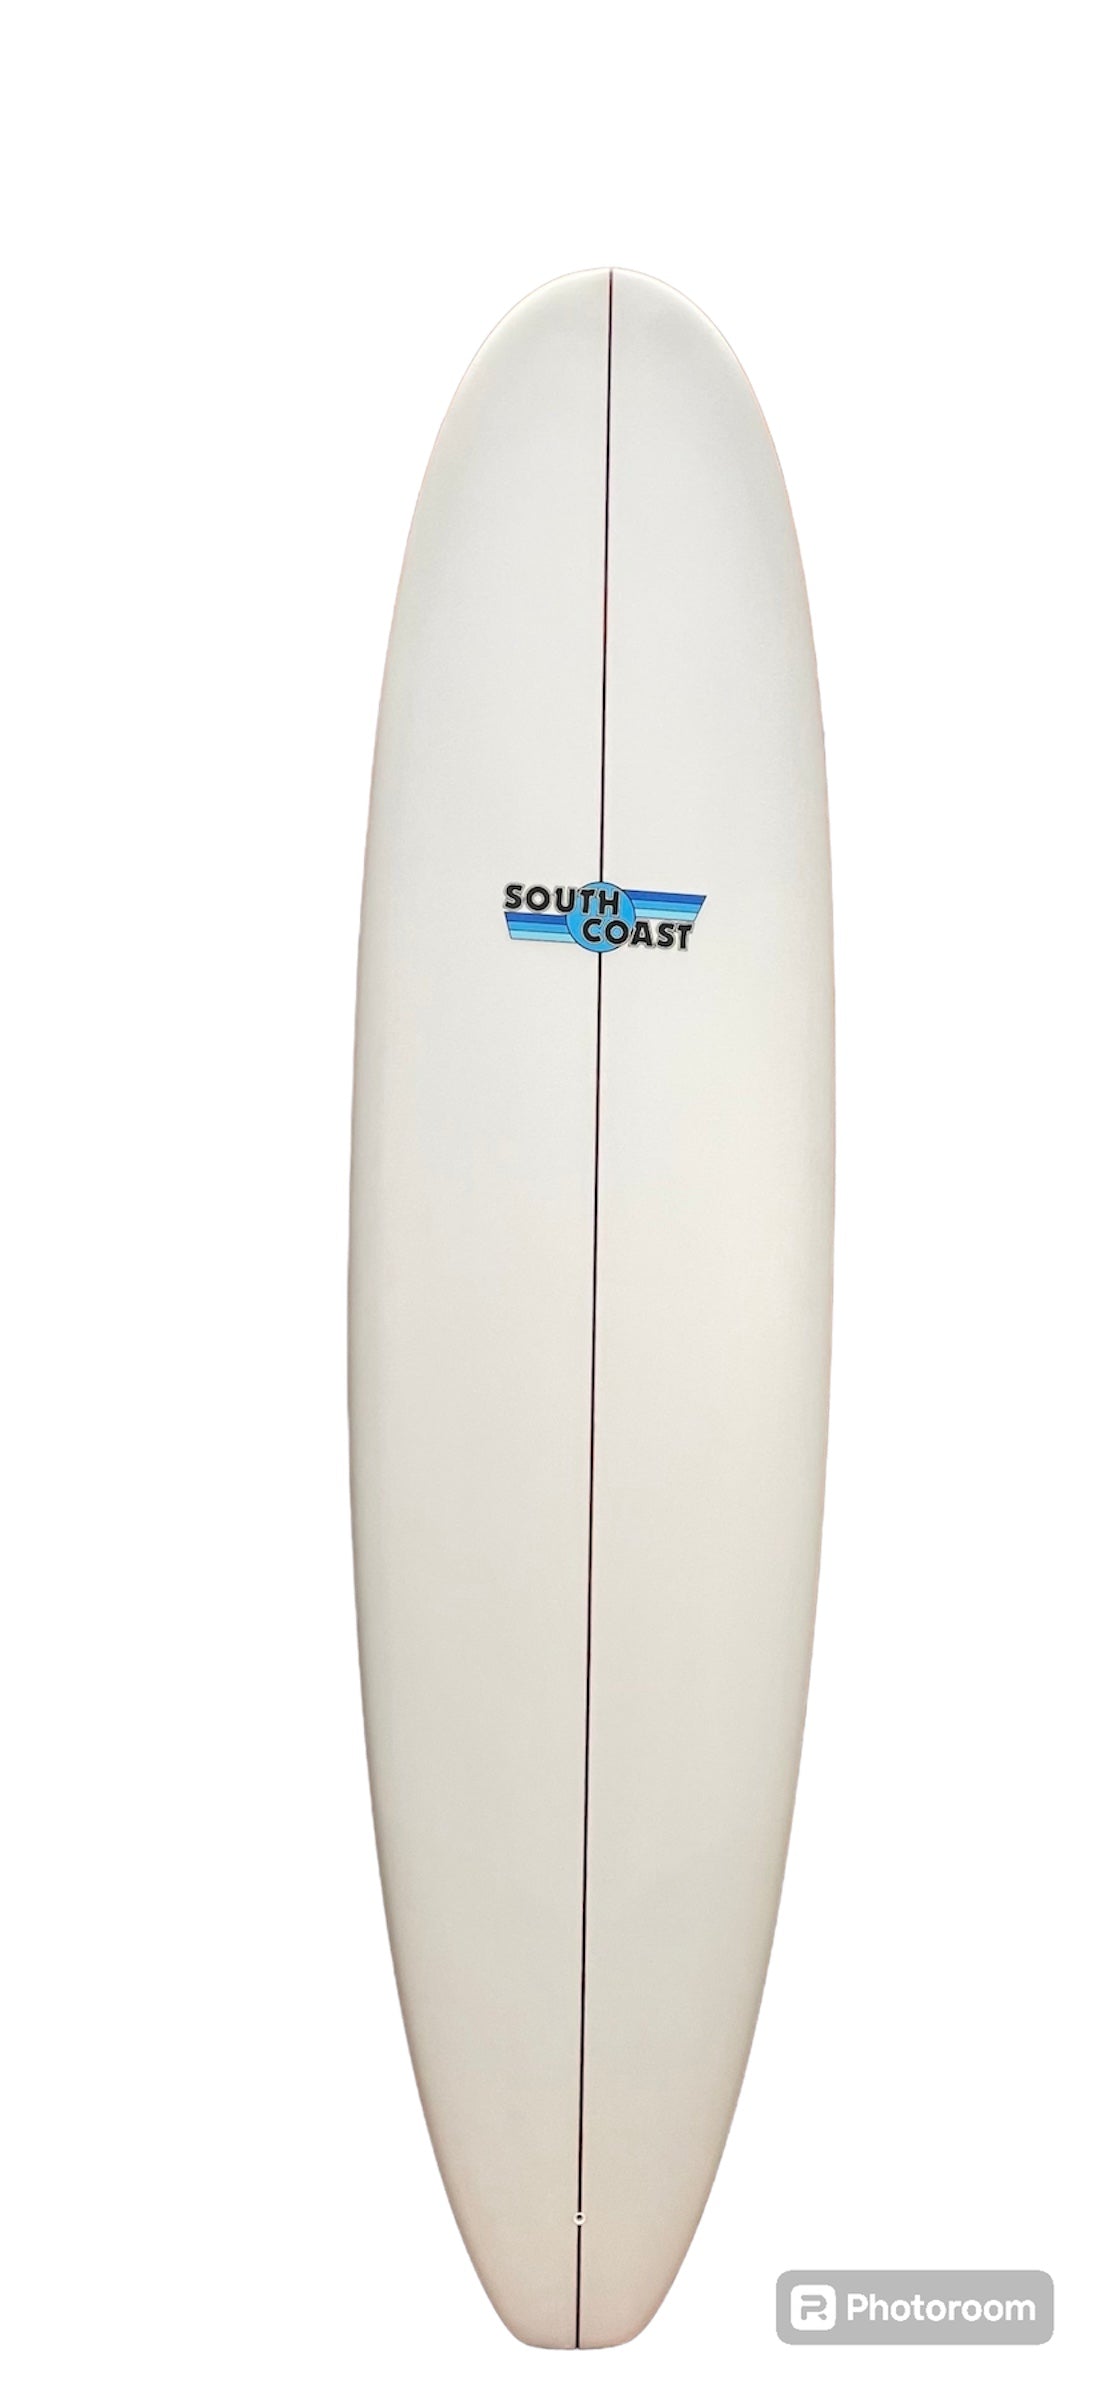 South Coast Cr3 Mini Surfboard 7'6"